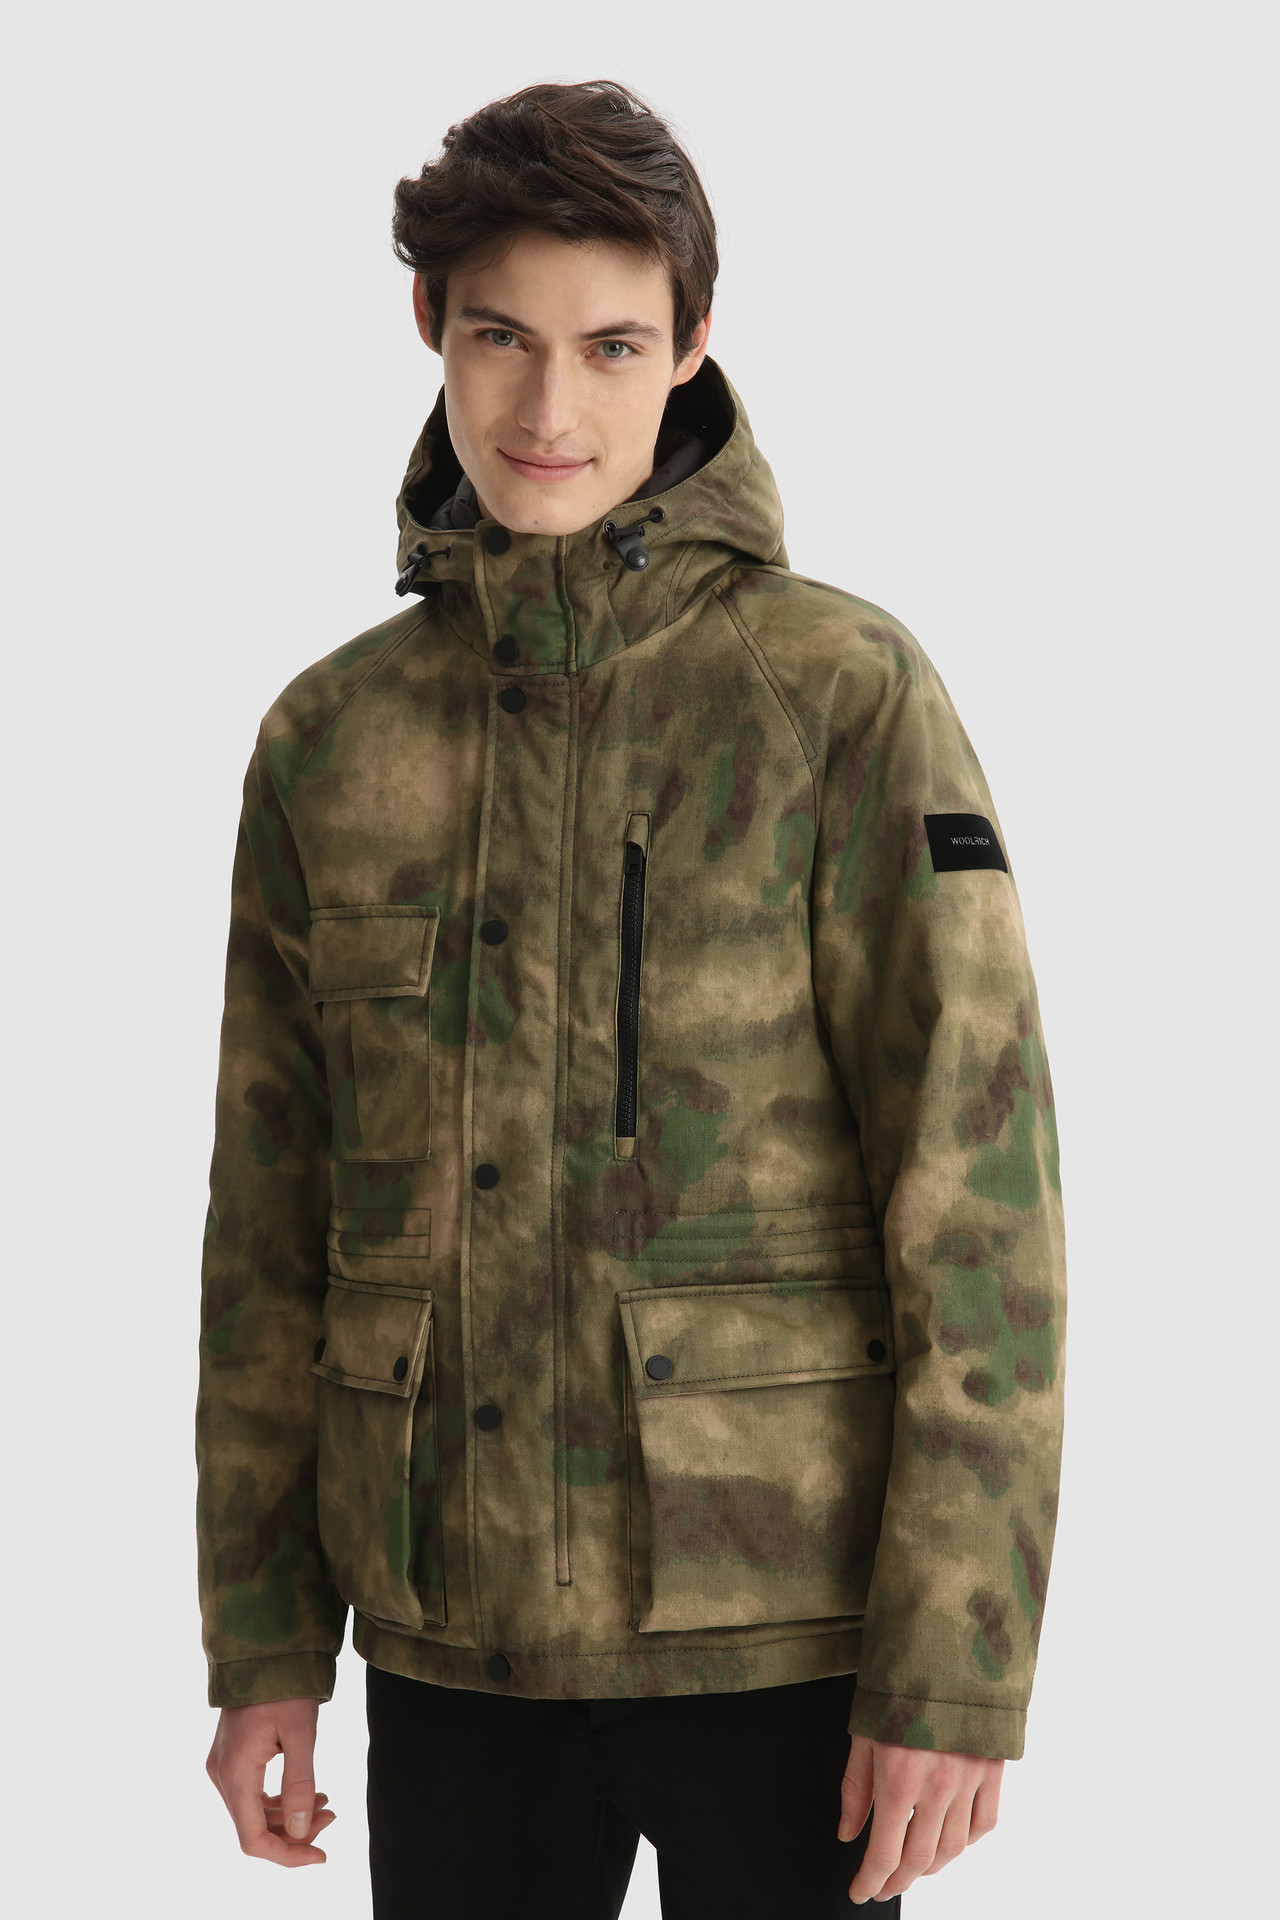 Men's Mountain Jacket in waxed cotton camo Green | Woolrich